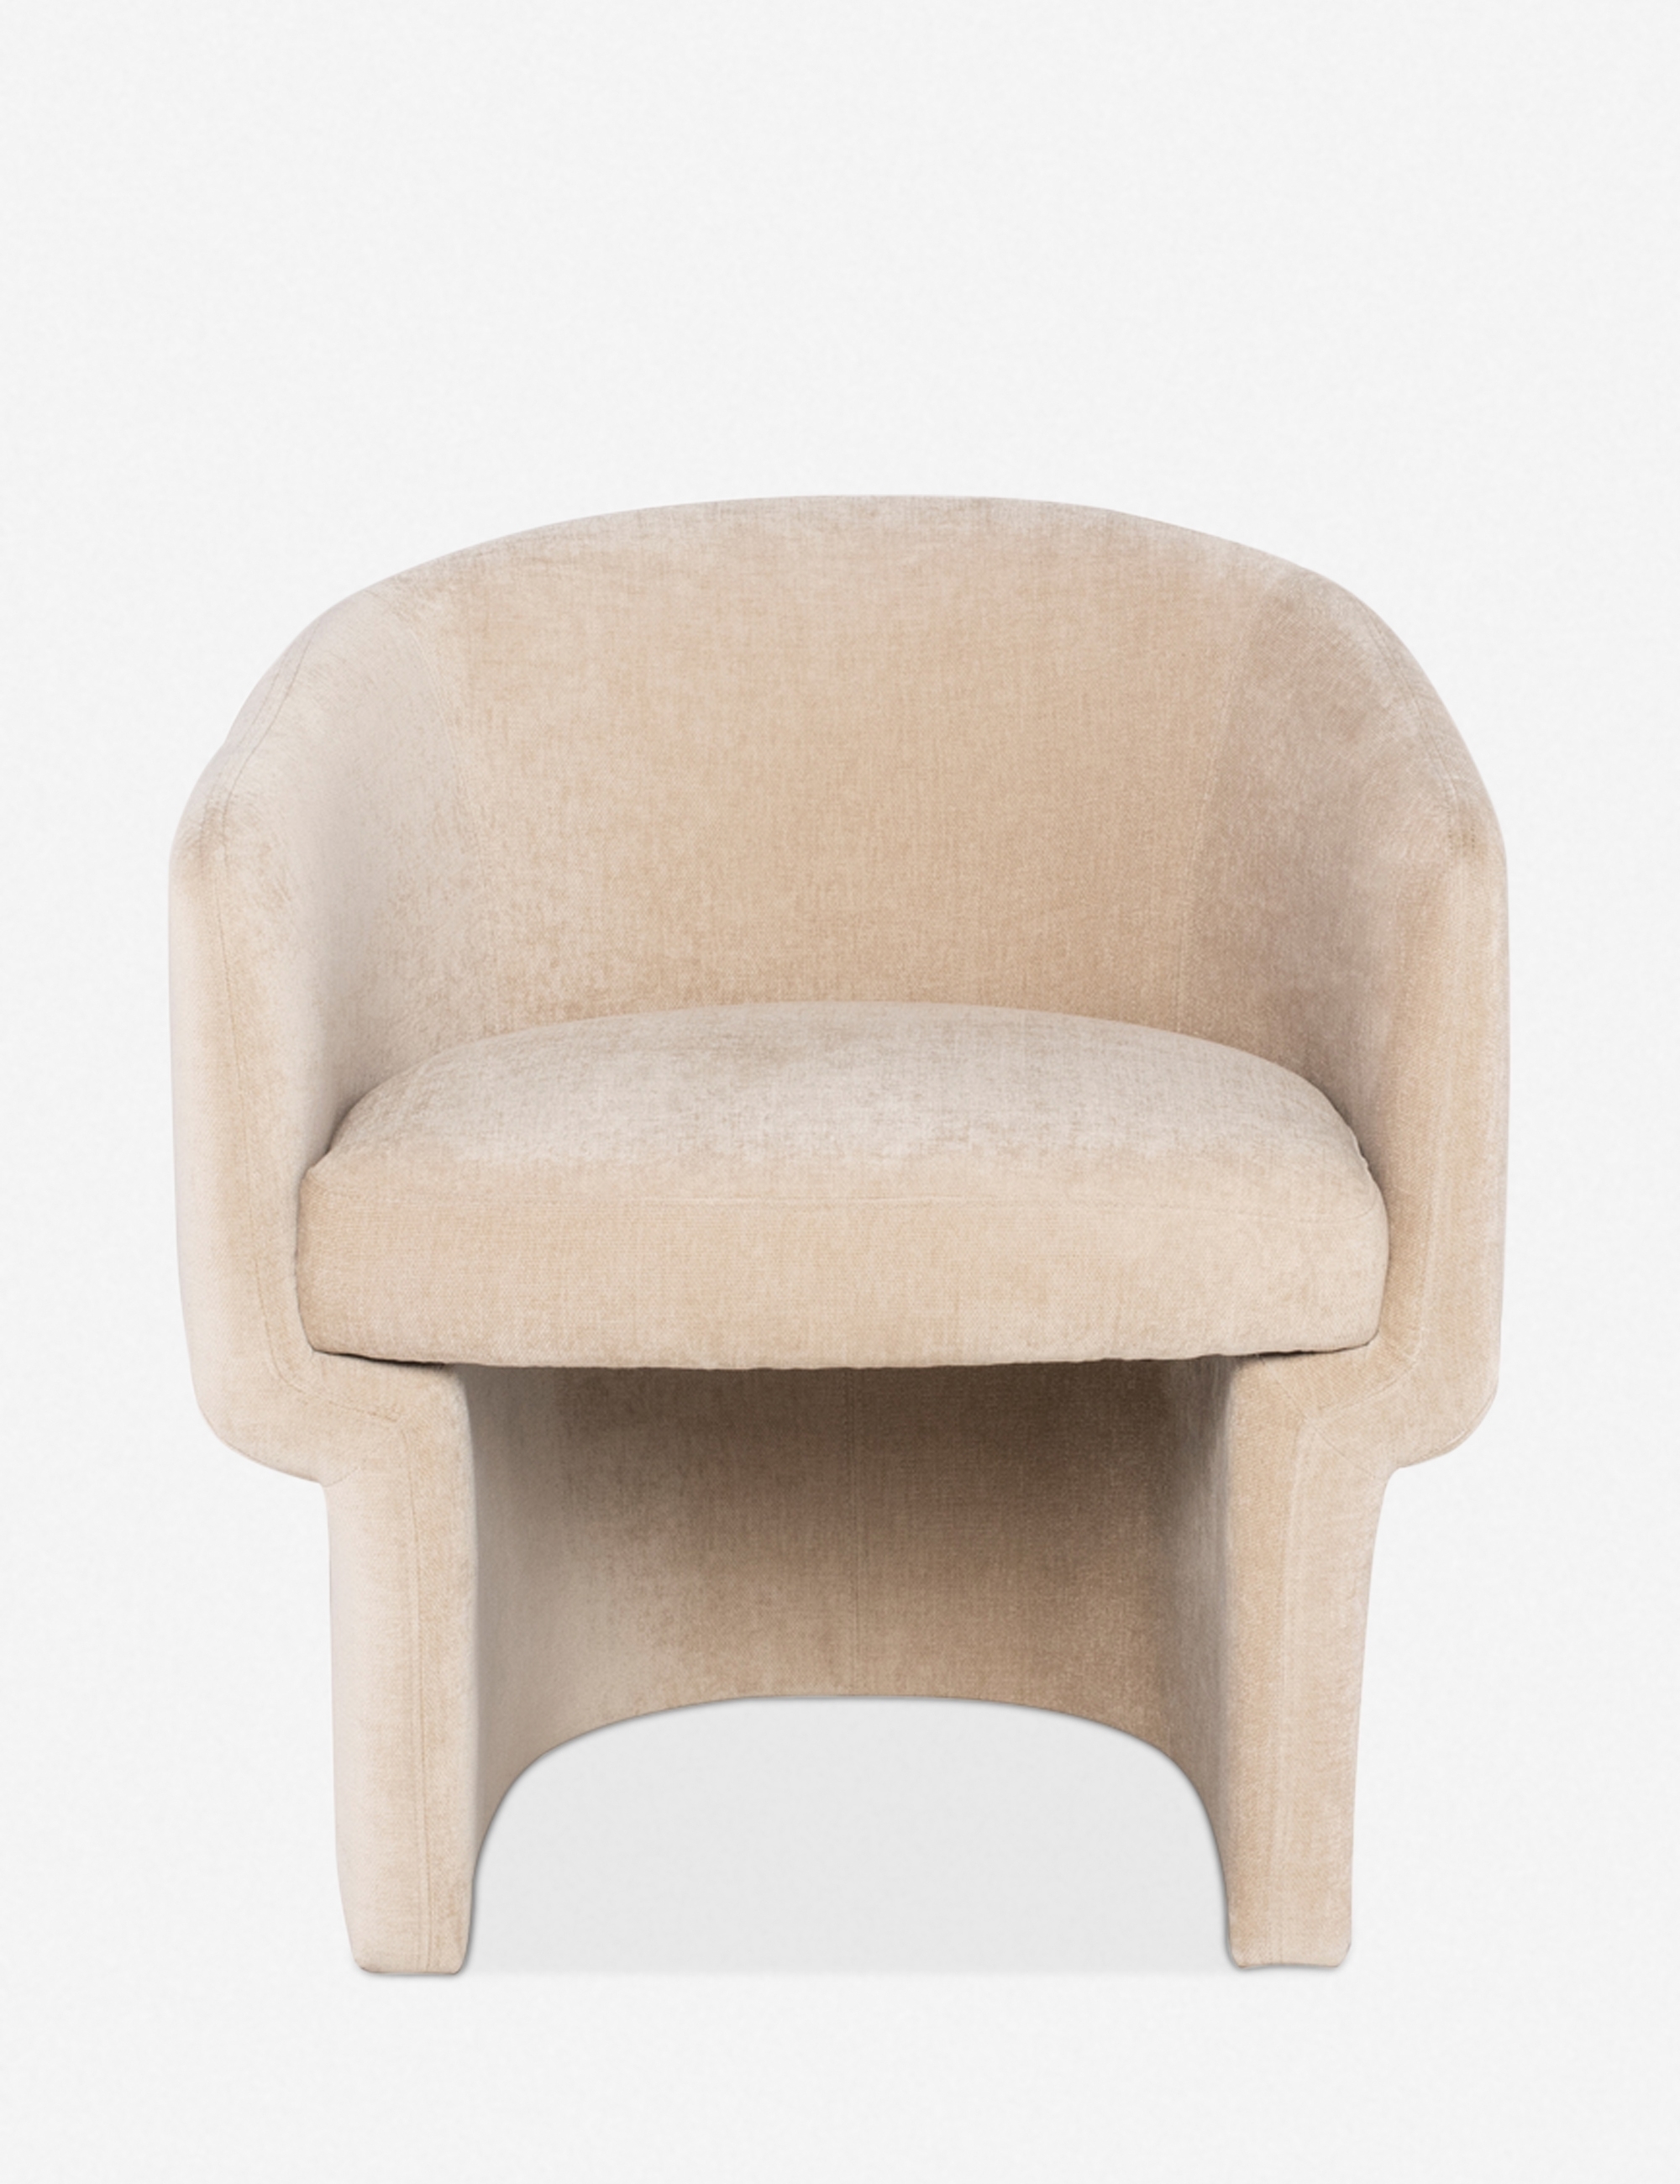 Pomona Occasional Chair, Almond - Image 0